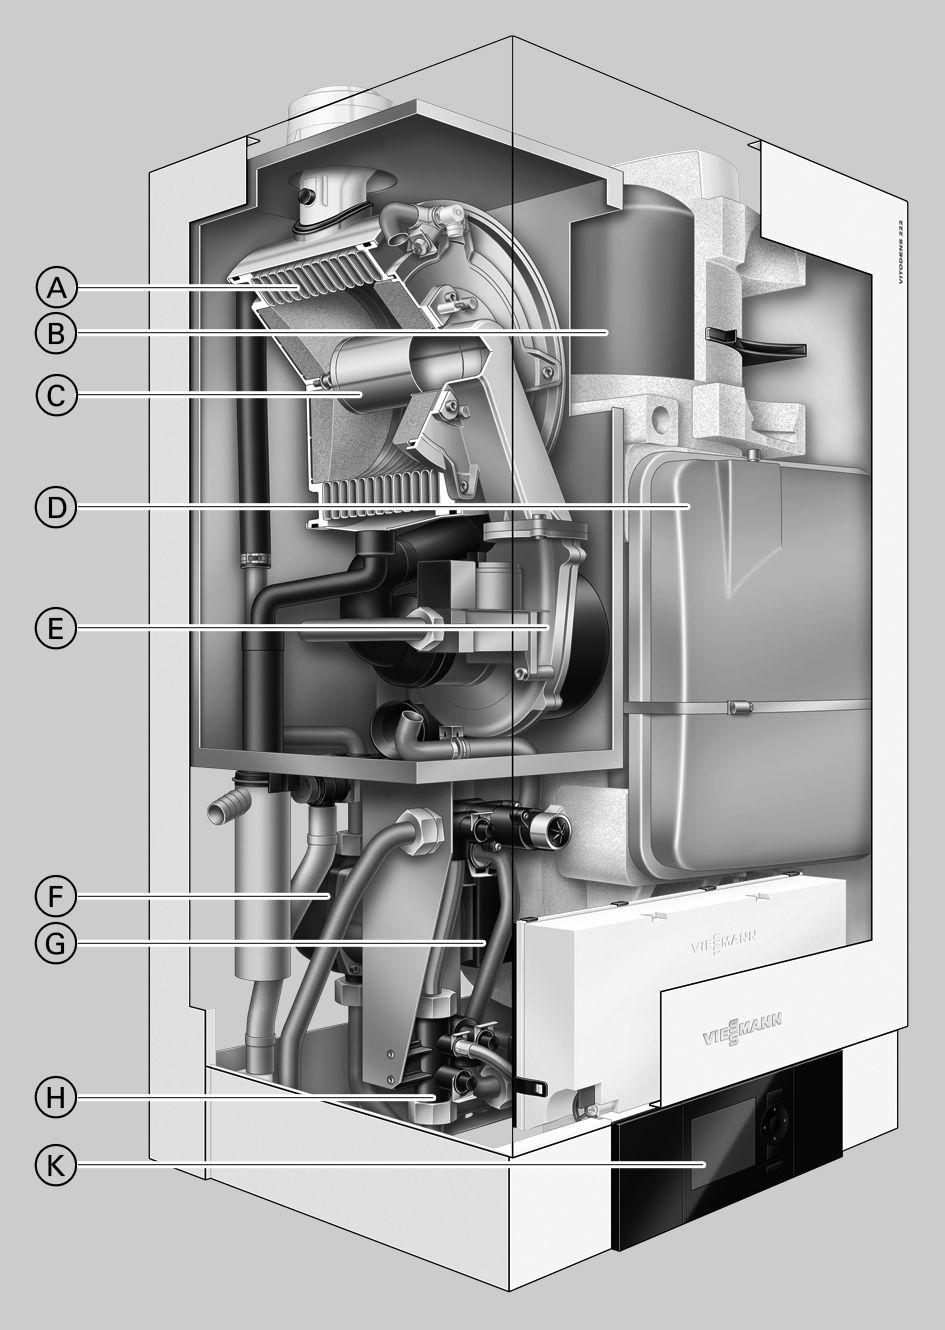 Prednosti H Priključci za plin i vodu K Digitalna regulacija kruga kotla Vitodens 222-W je kompaktni plinski kondenzacijski uređaj za visoke zahtjeve komfora pitke vode koji ne zauzima puno prostora.